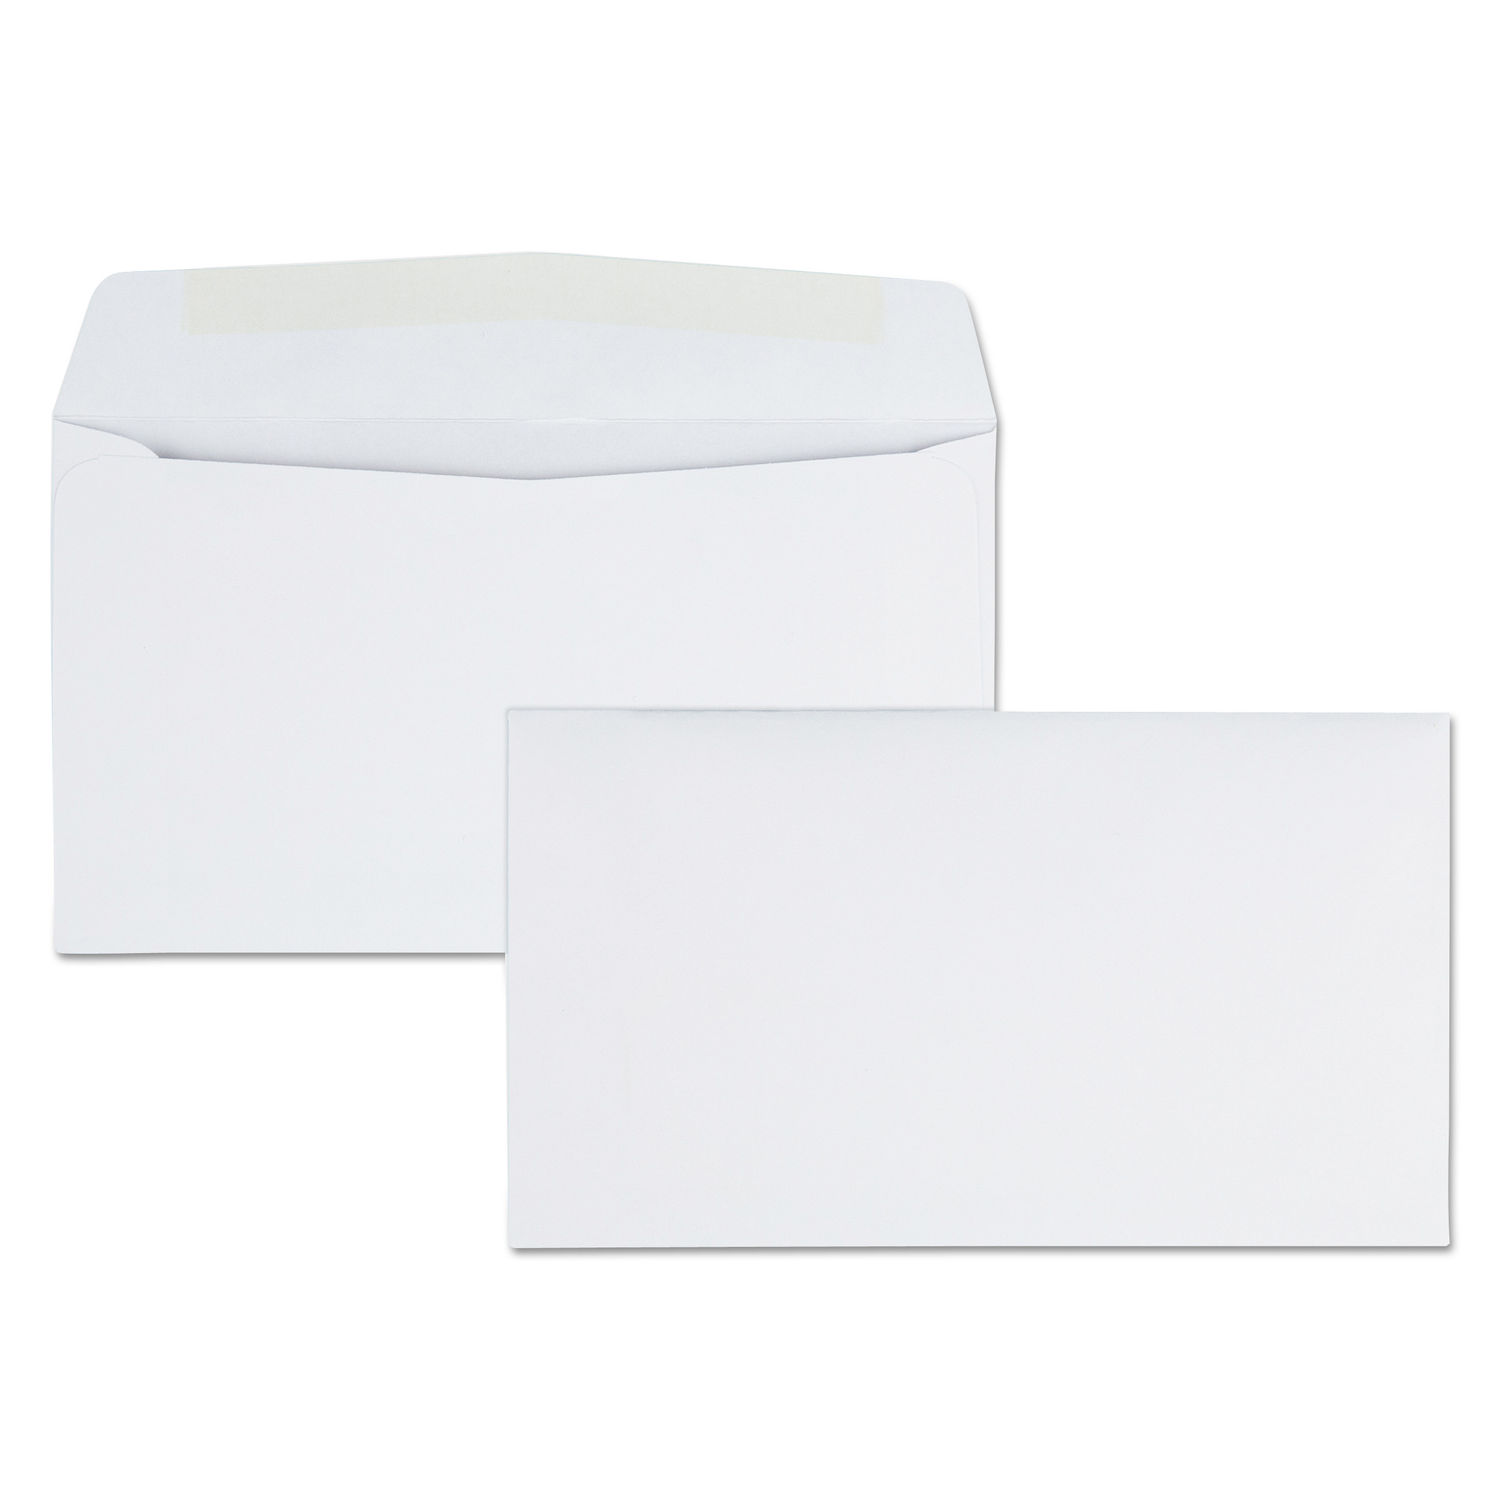 Business Envelope #6 3/4, Commercial Flap, Side Seam, Gummed Closure, 24 lb Bond Weight Paper, 3.63 x 6.5, White, 500/Box